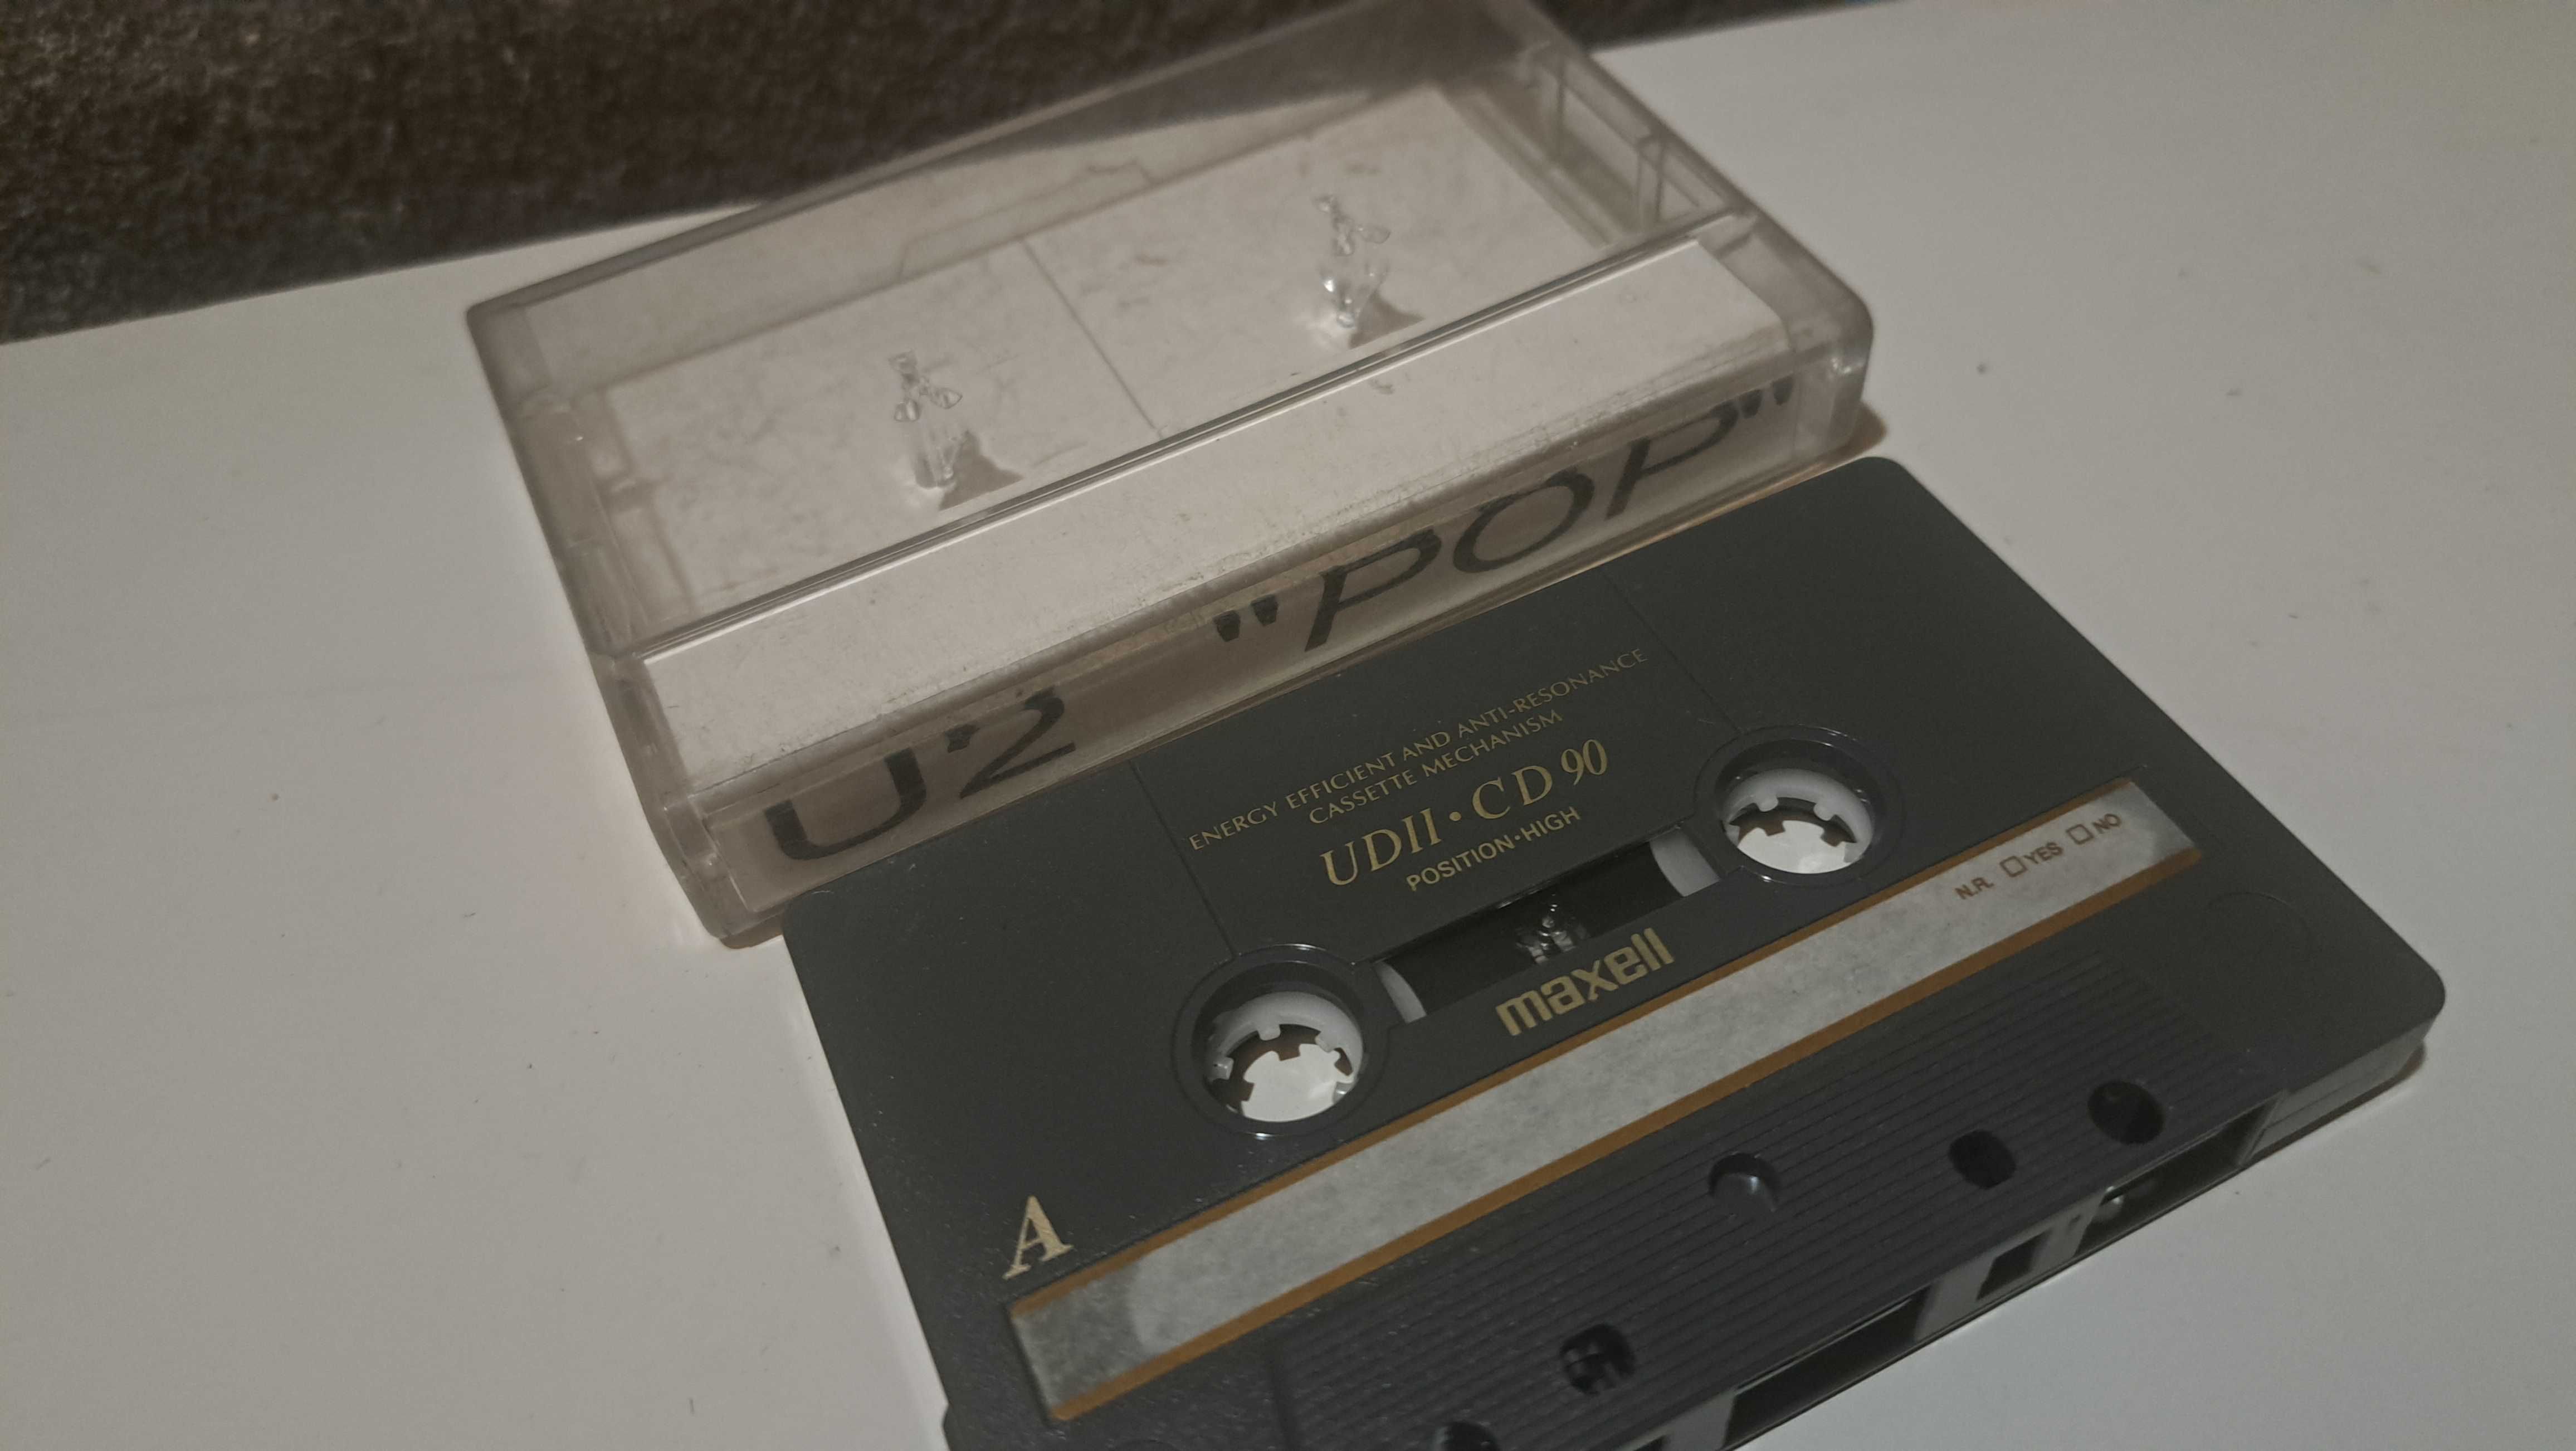 Maxell UDII CD90 kaseta nośnik